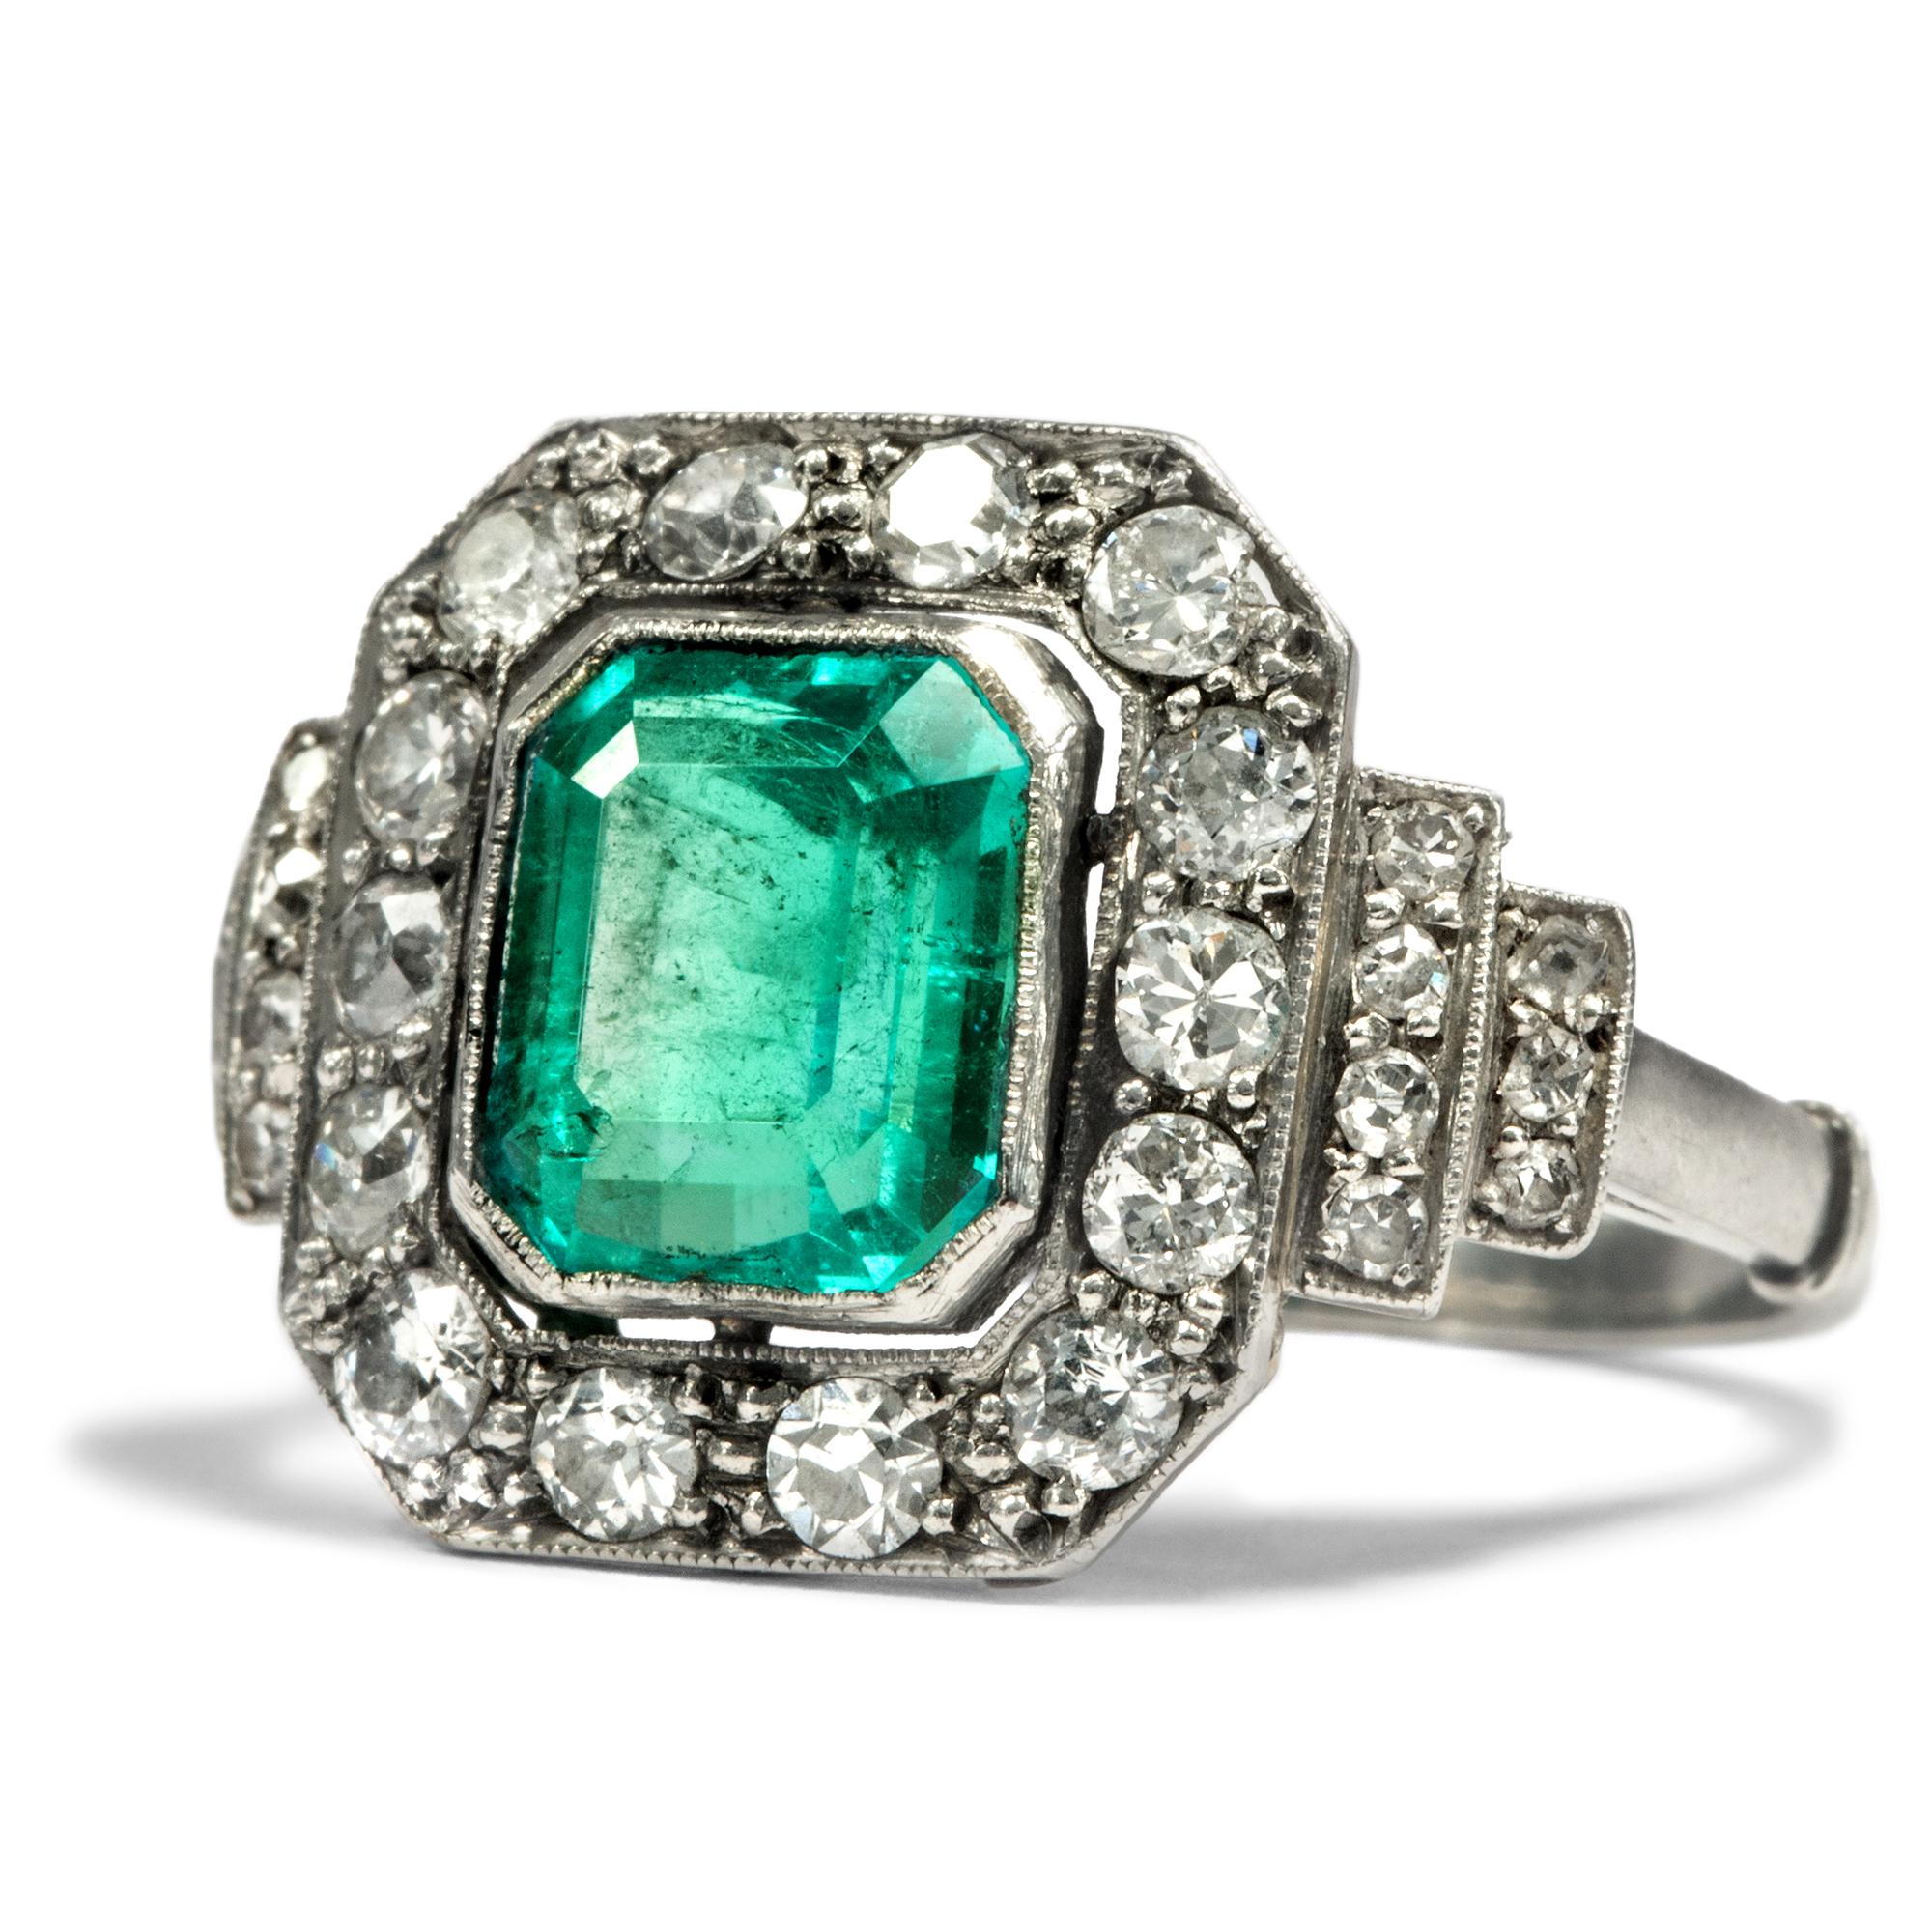 Emerald Cut Art Deco circa 1930, Certified 2.42 Carat Emerald Diamond Platinum Cocktail Ring